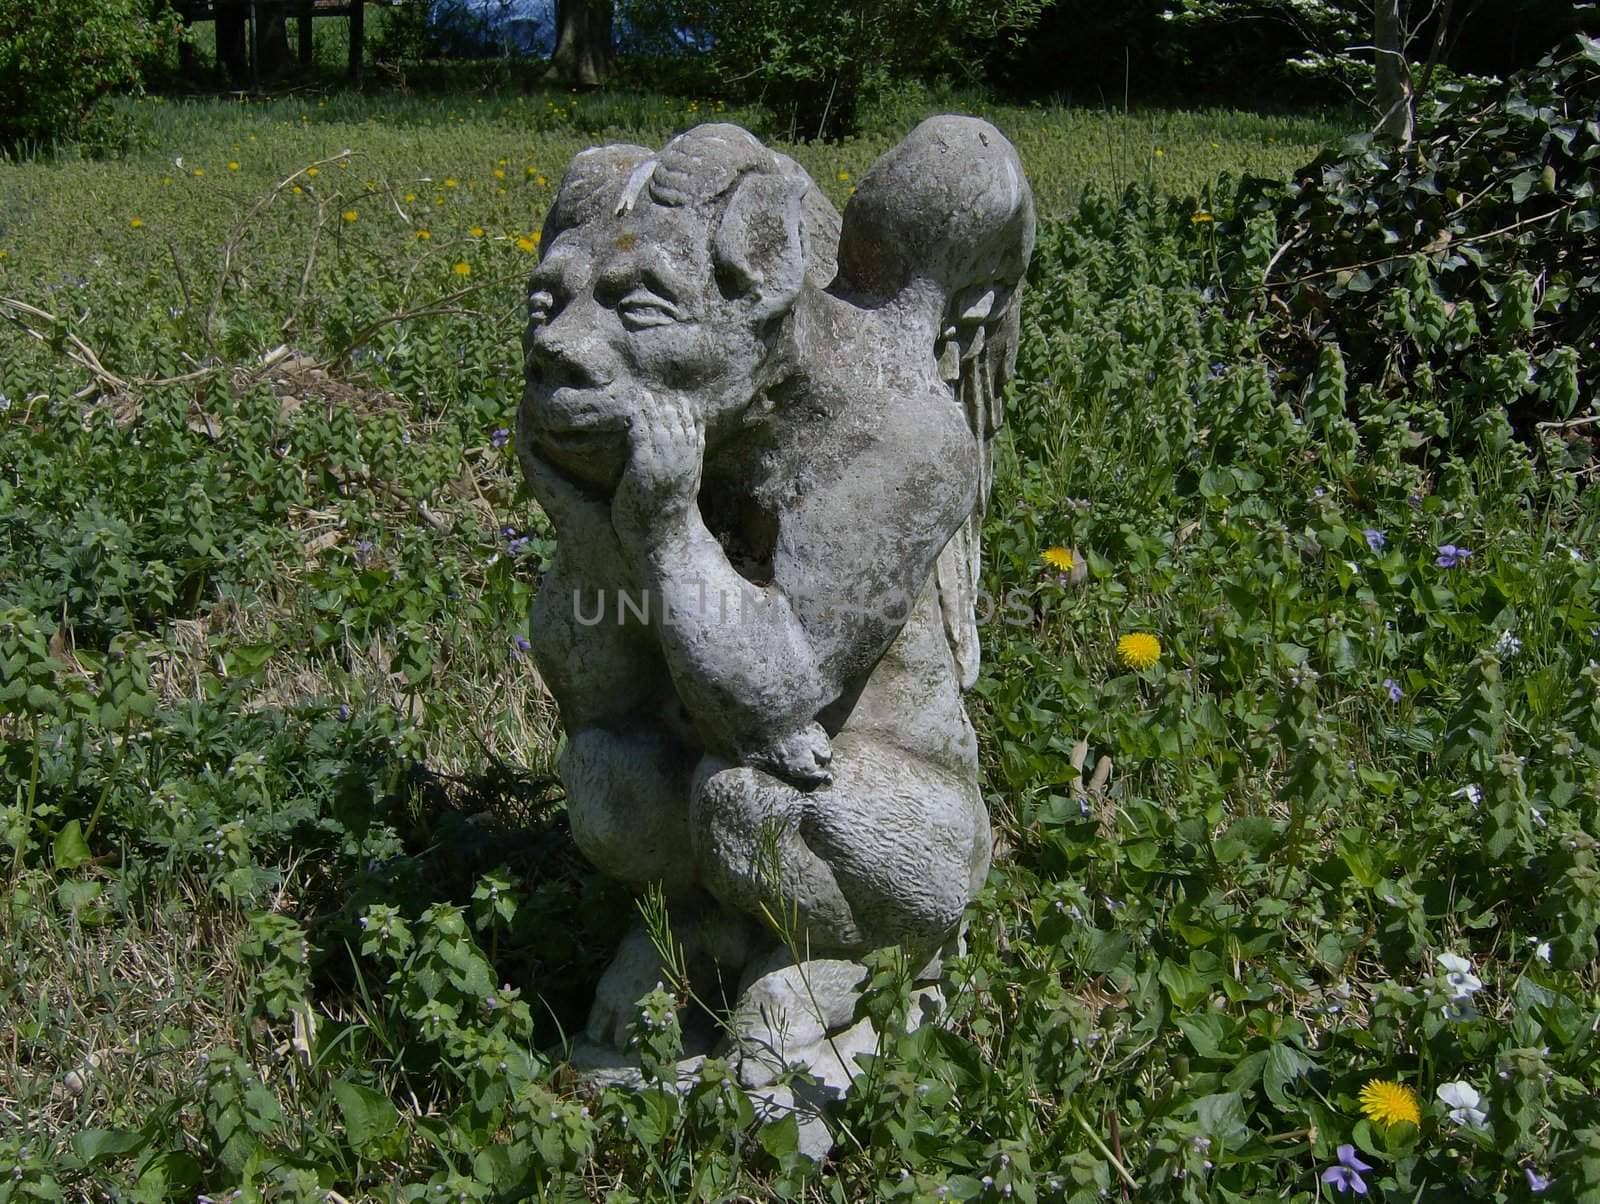 Gargoyle garden statue by xplorer1959@hotmail.com